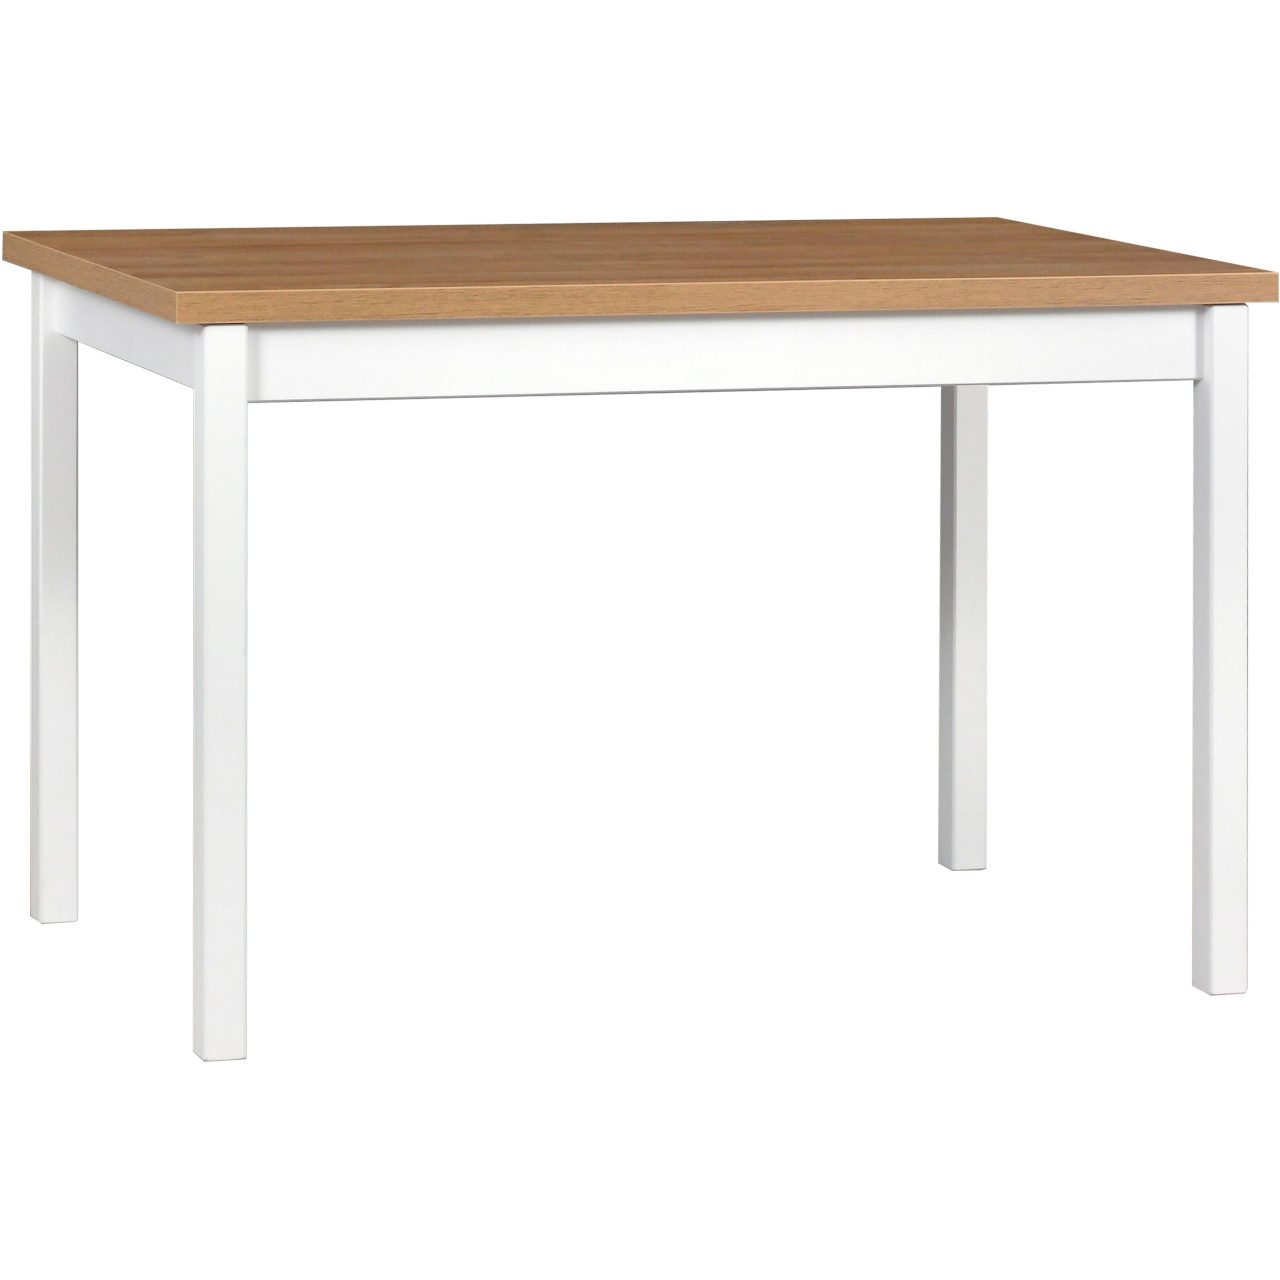 Table MAX 3 70x120 grandson laminate / white